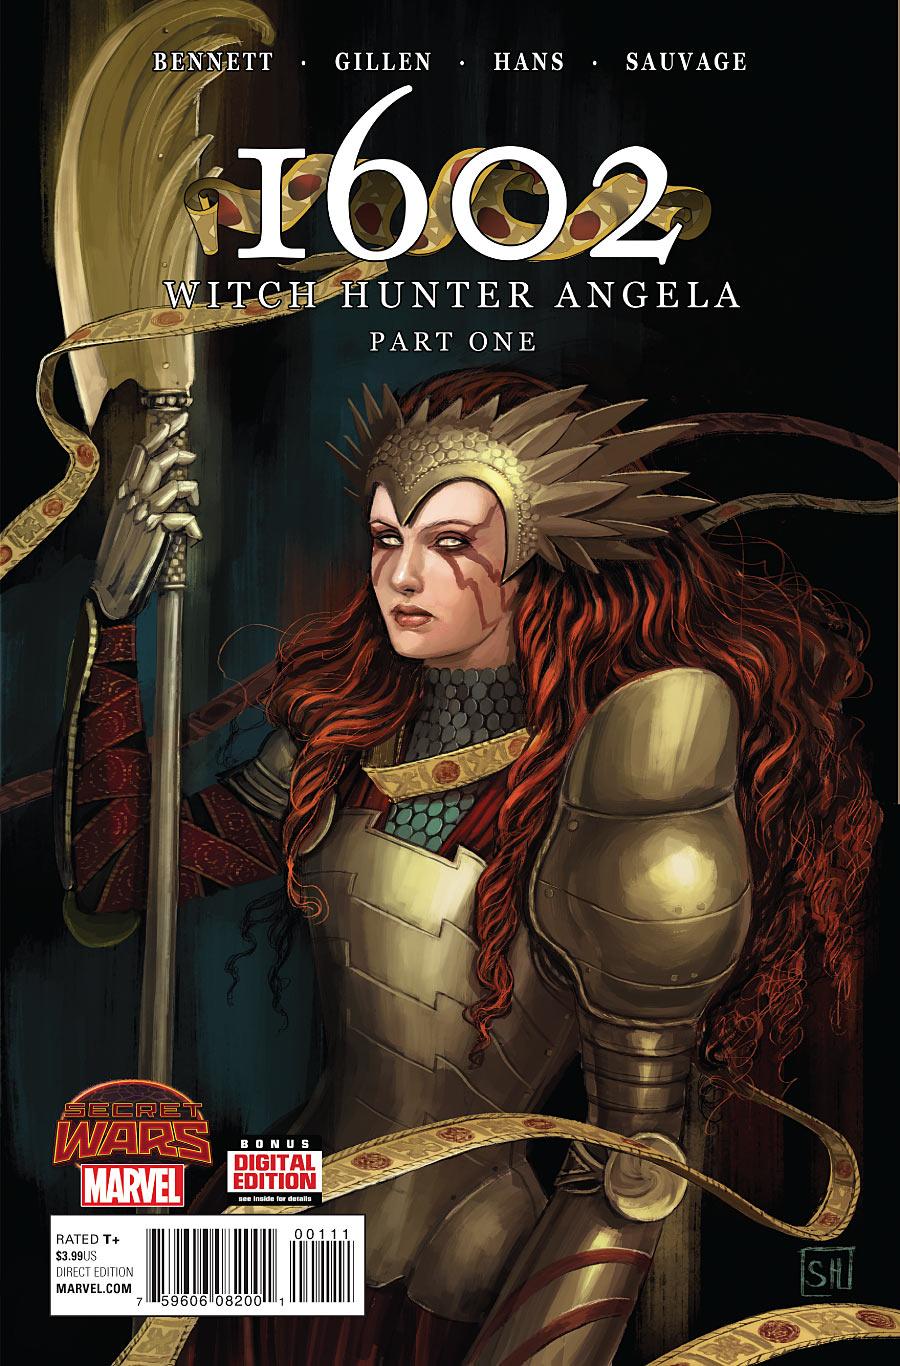 1602 Witch Hunter Angela Vol. 1 #1